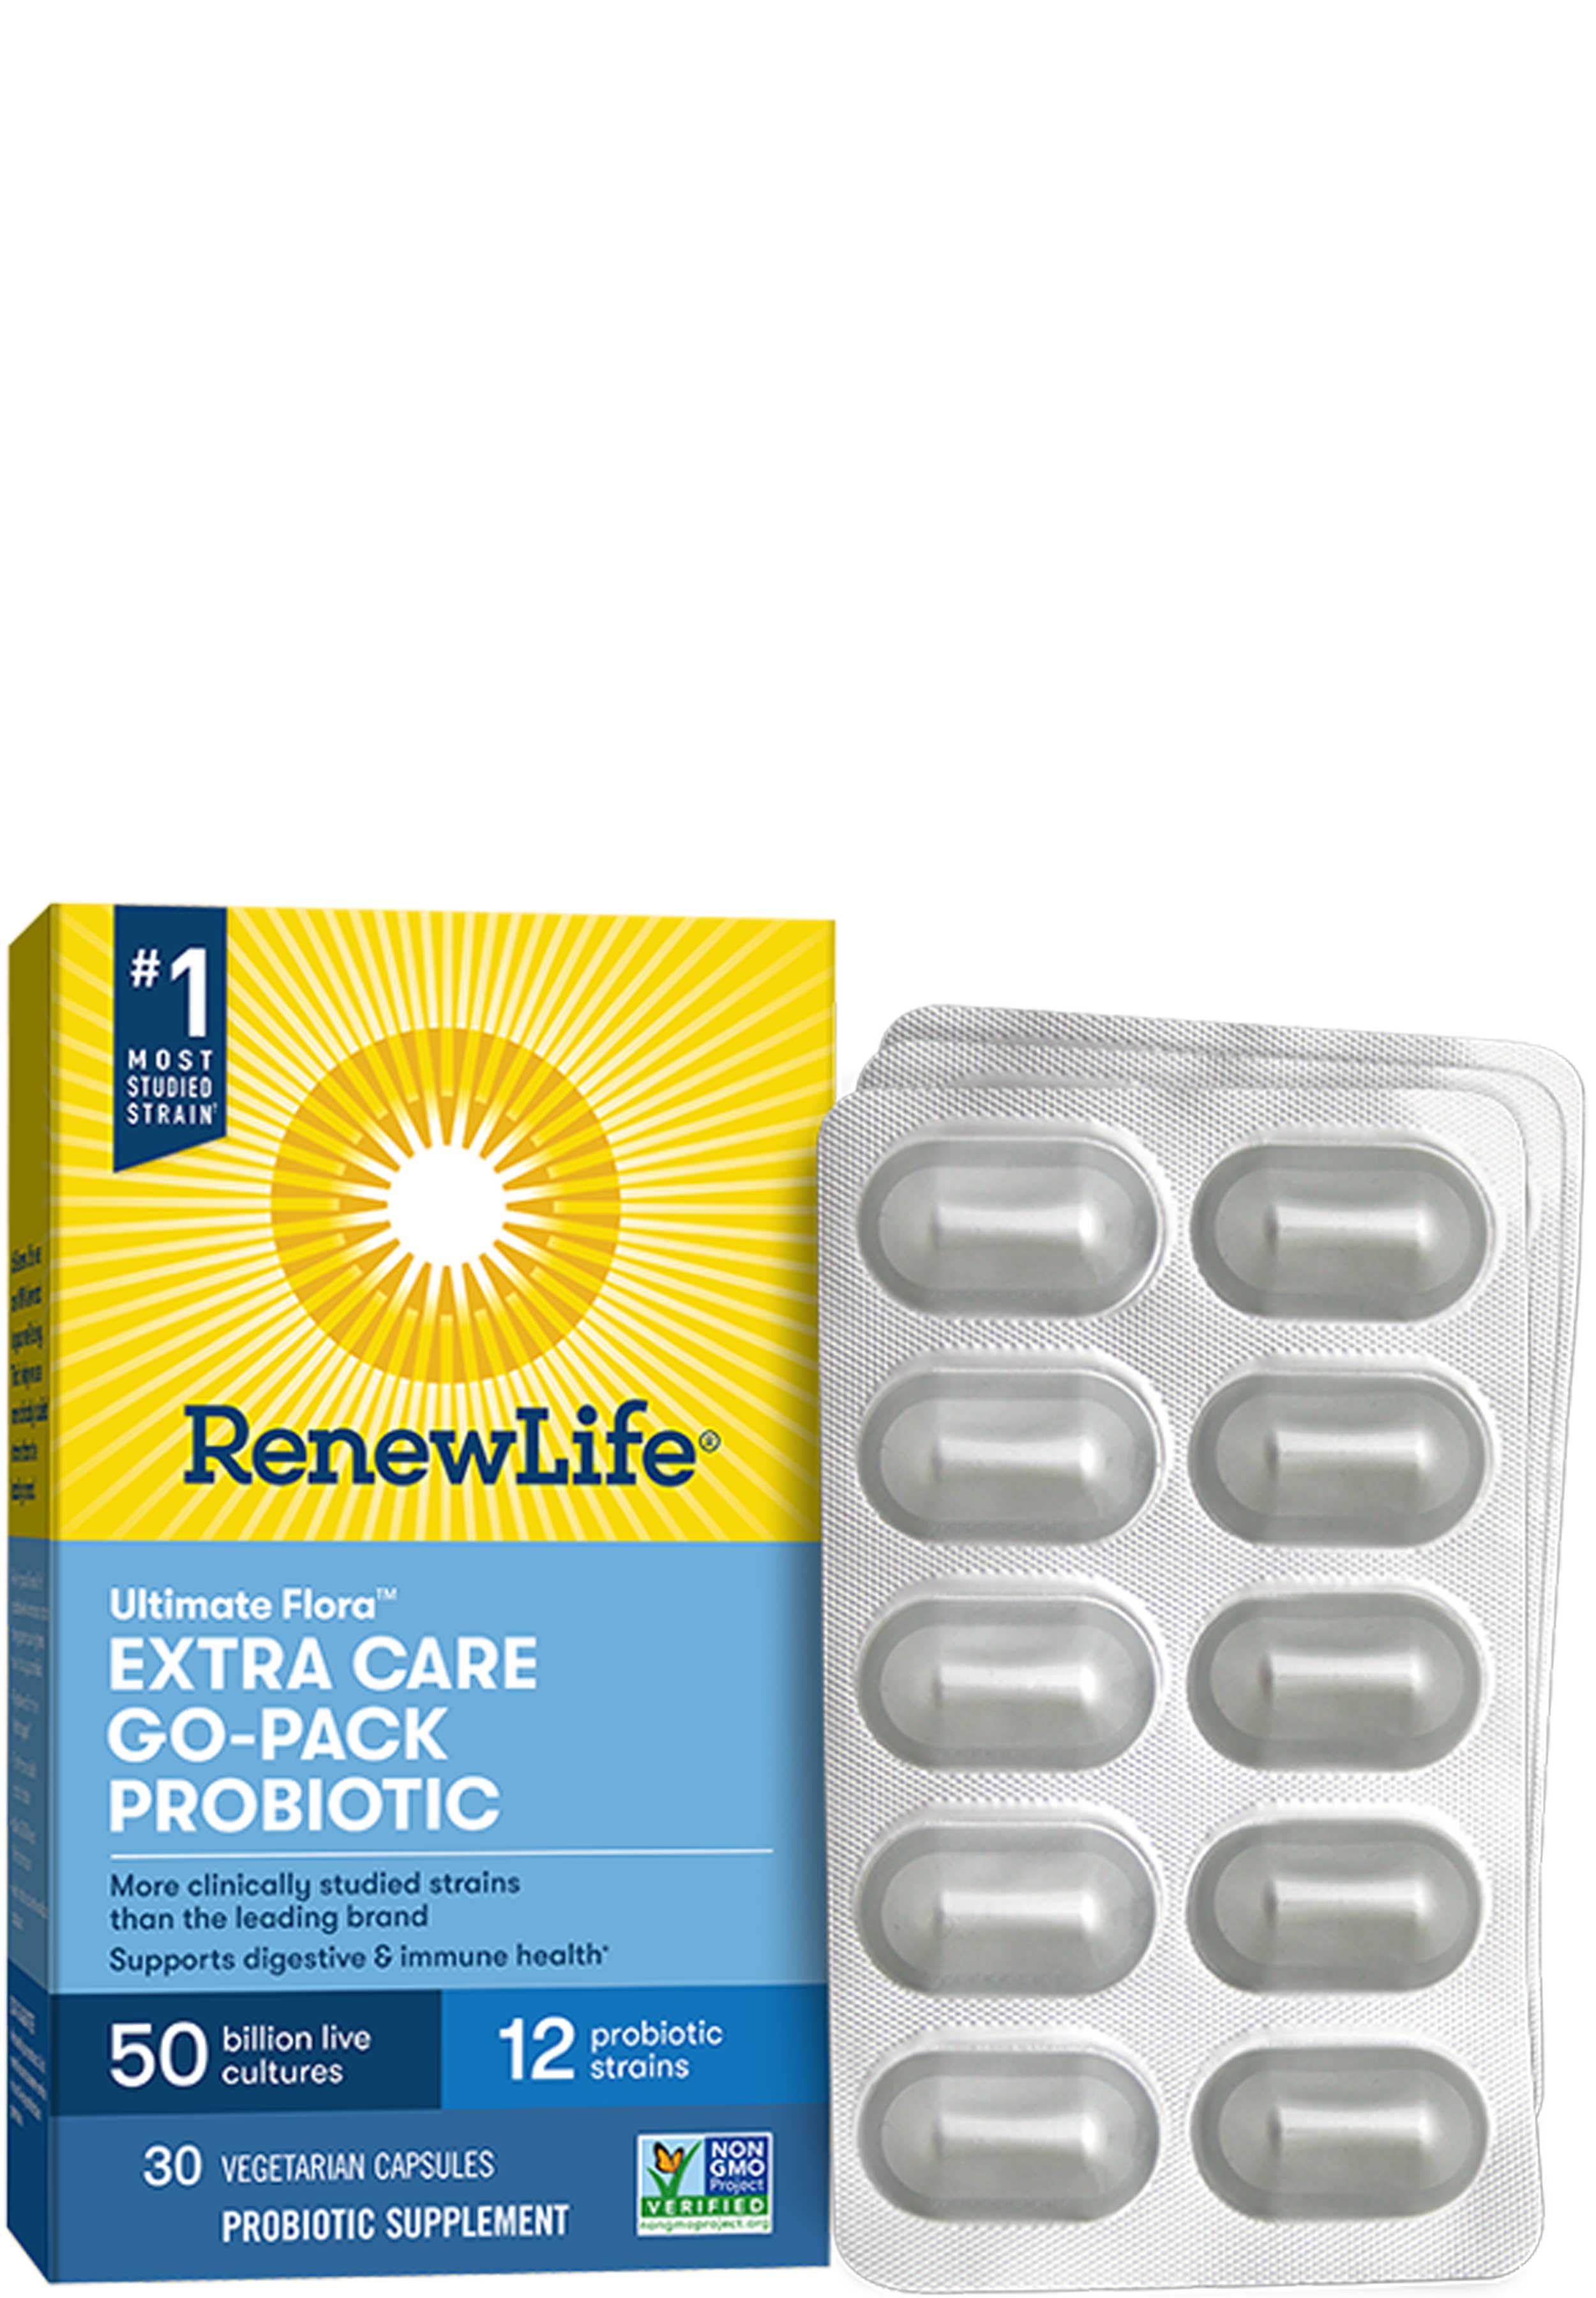 Renew Life Ultimate Flora Extra Care Probiotic Go-Pack 50 Billion